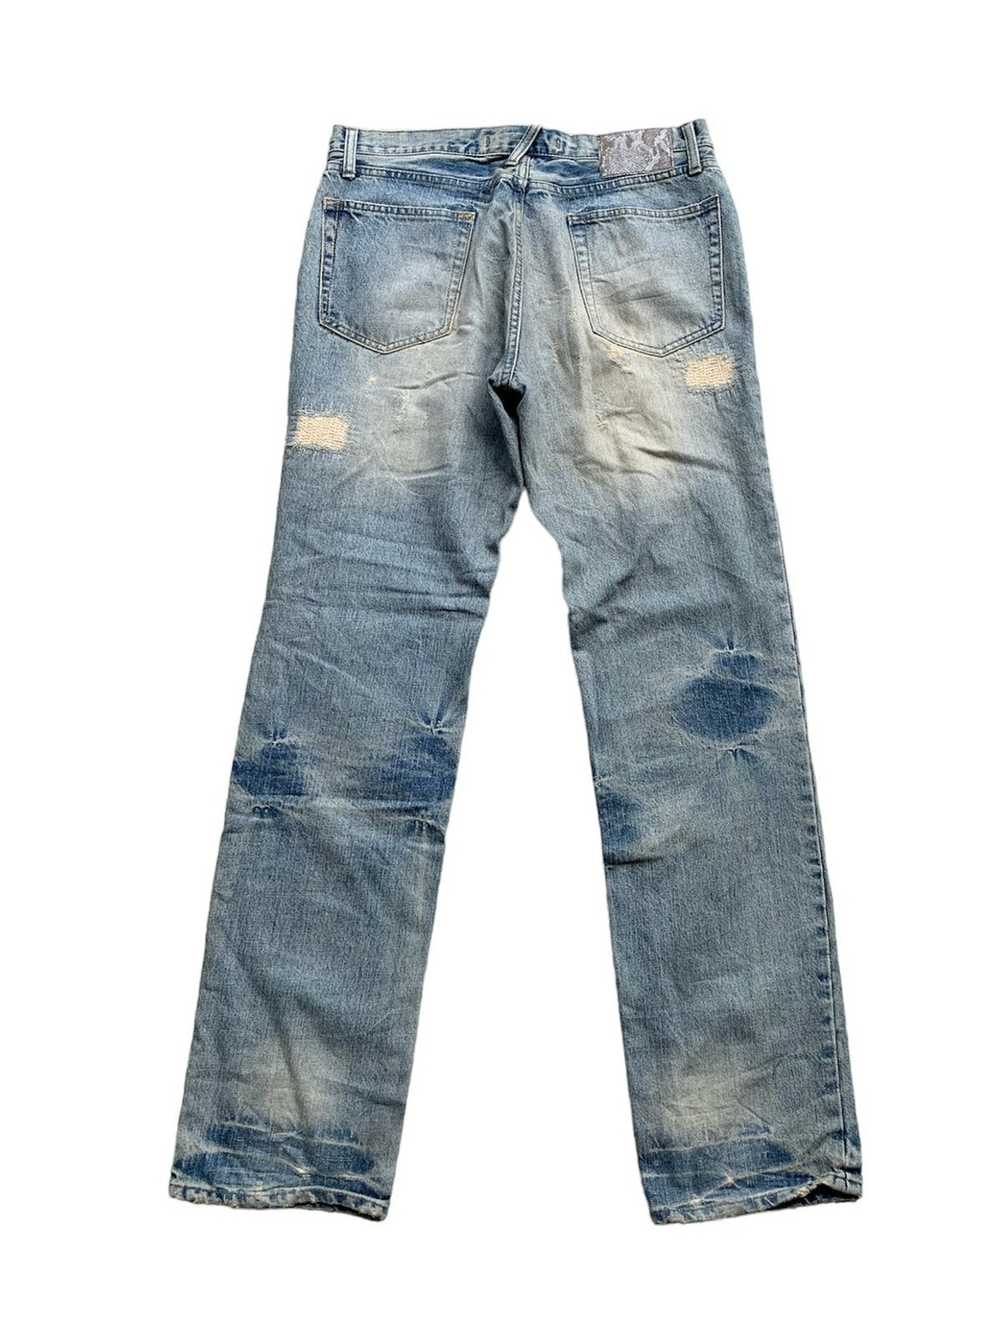 PPFM PPFM Distressed Denim Jeans - image 2